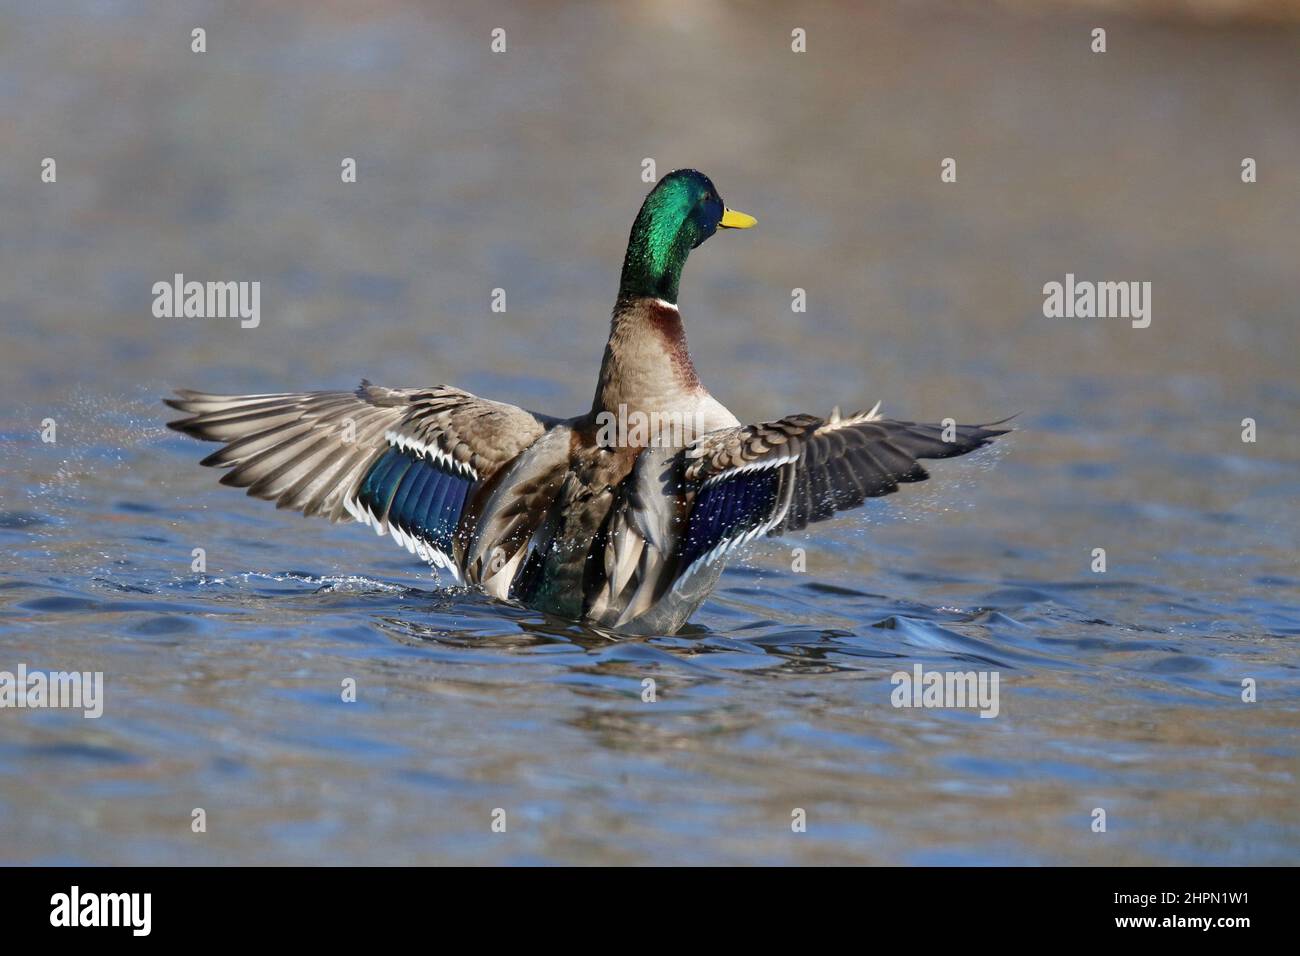 Drake Mallard duck Anas platyrhynchos wing flap on a lake in winter Stock Photo